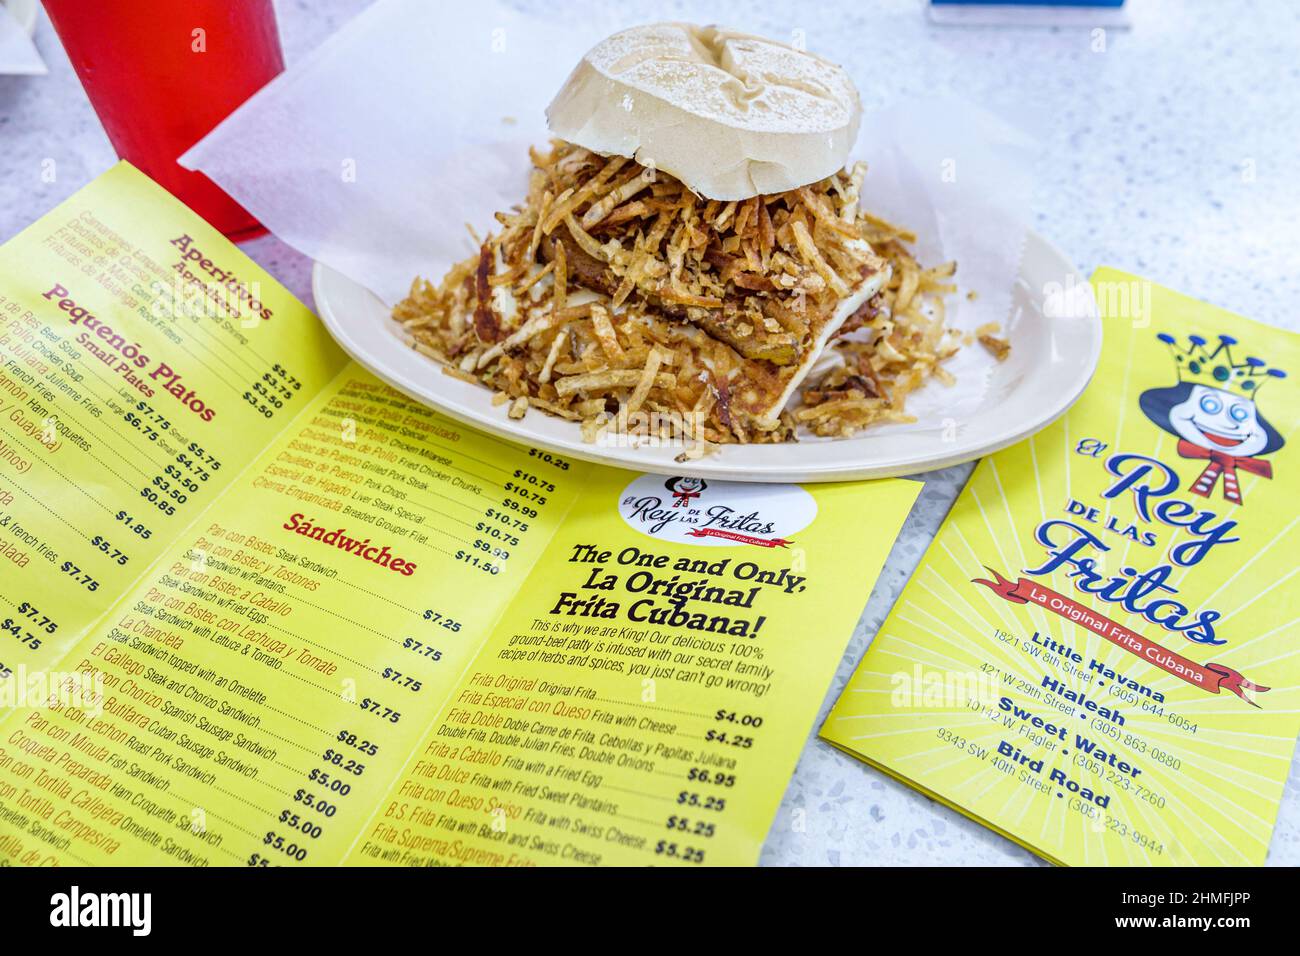 Miami Florida, Little Havana, El Rey de las Fritas, kubanisches Restaurant mit Frita-Hamburger-Menü Stockfoto